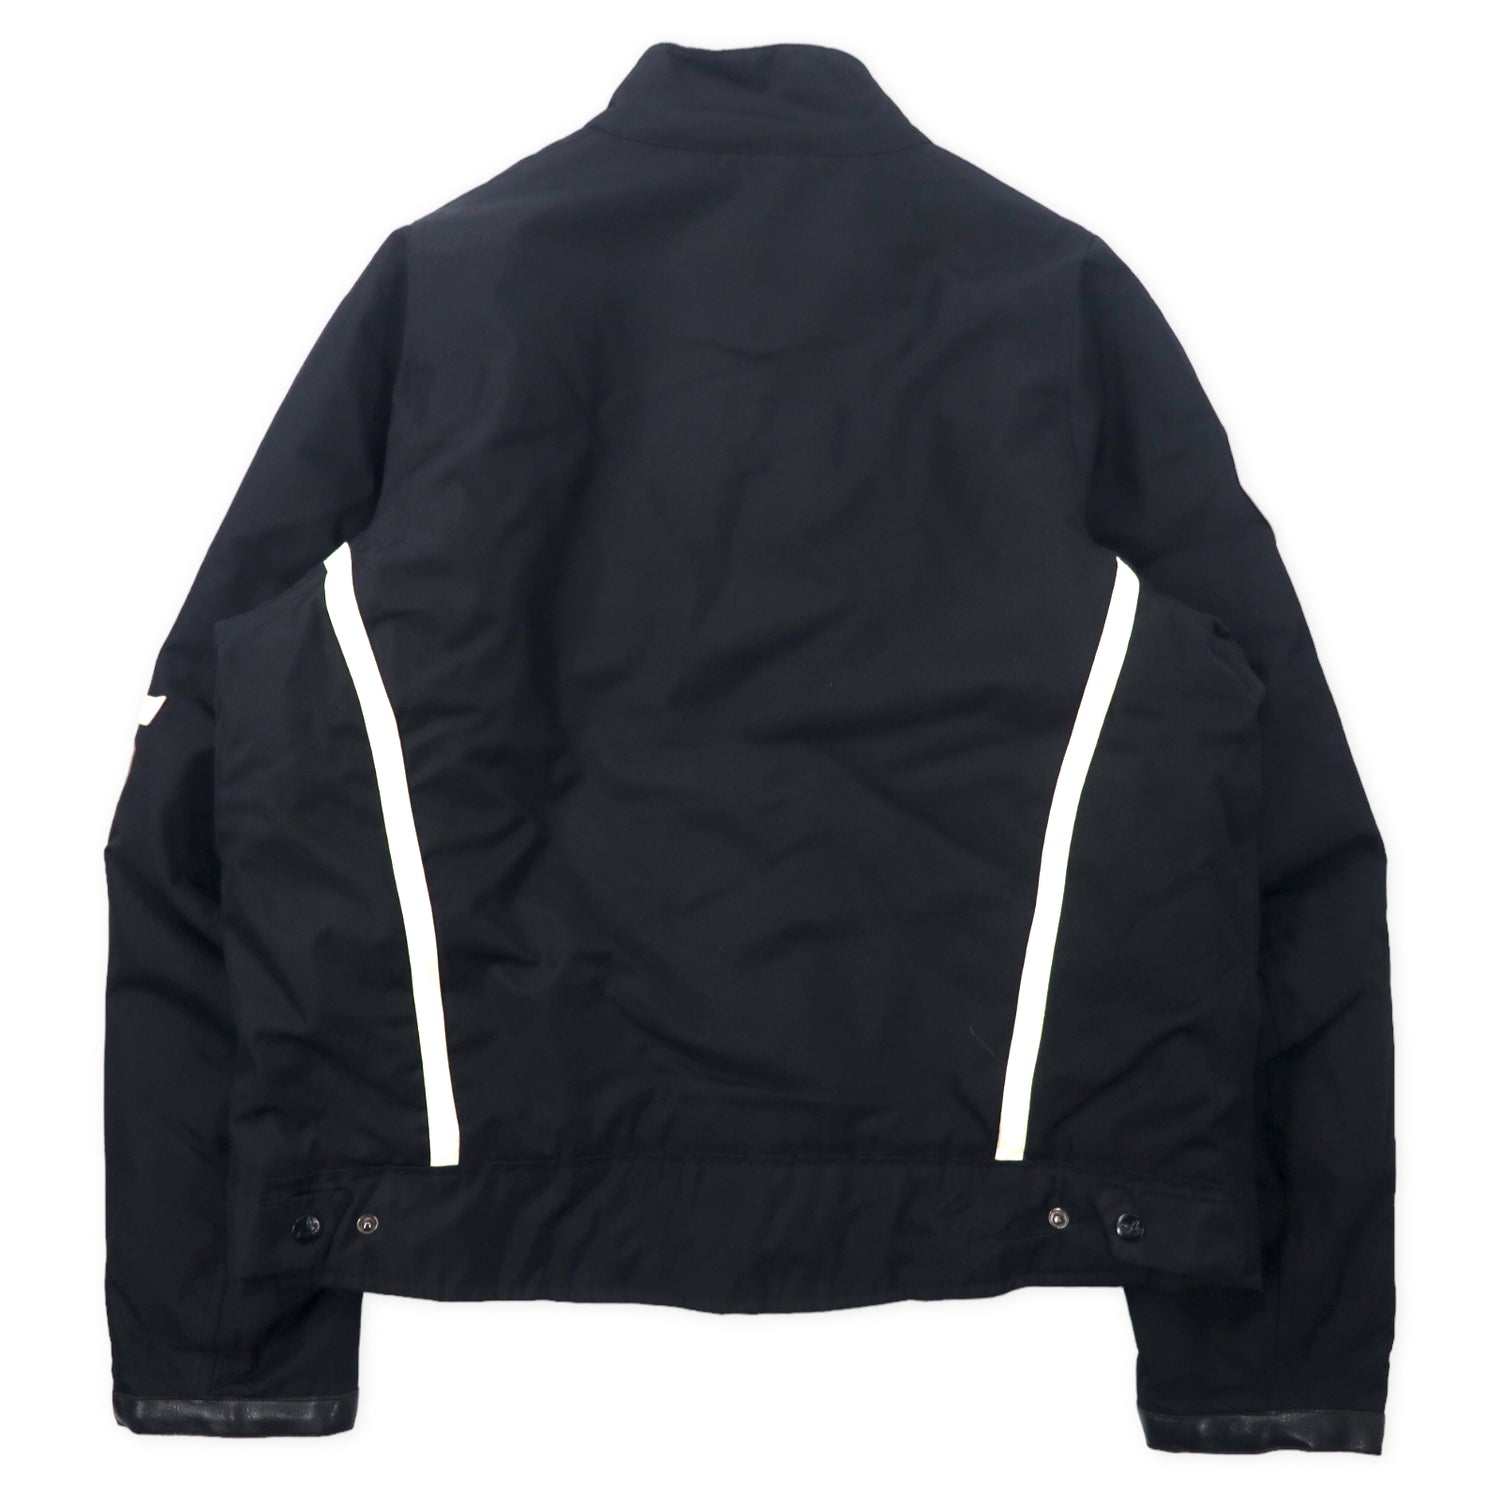 Quick Shark Racing Jacket Single Riders Jacket XL Black Polyester FLEECE  Liner PU Leather Switch